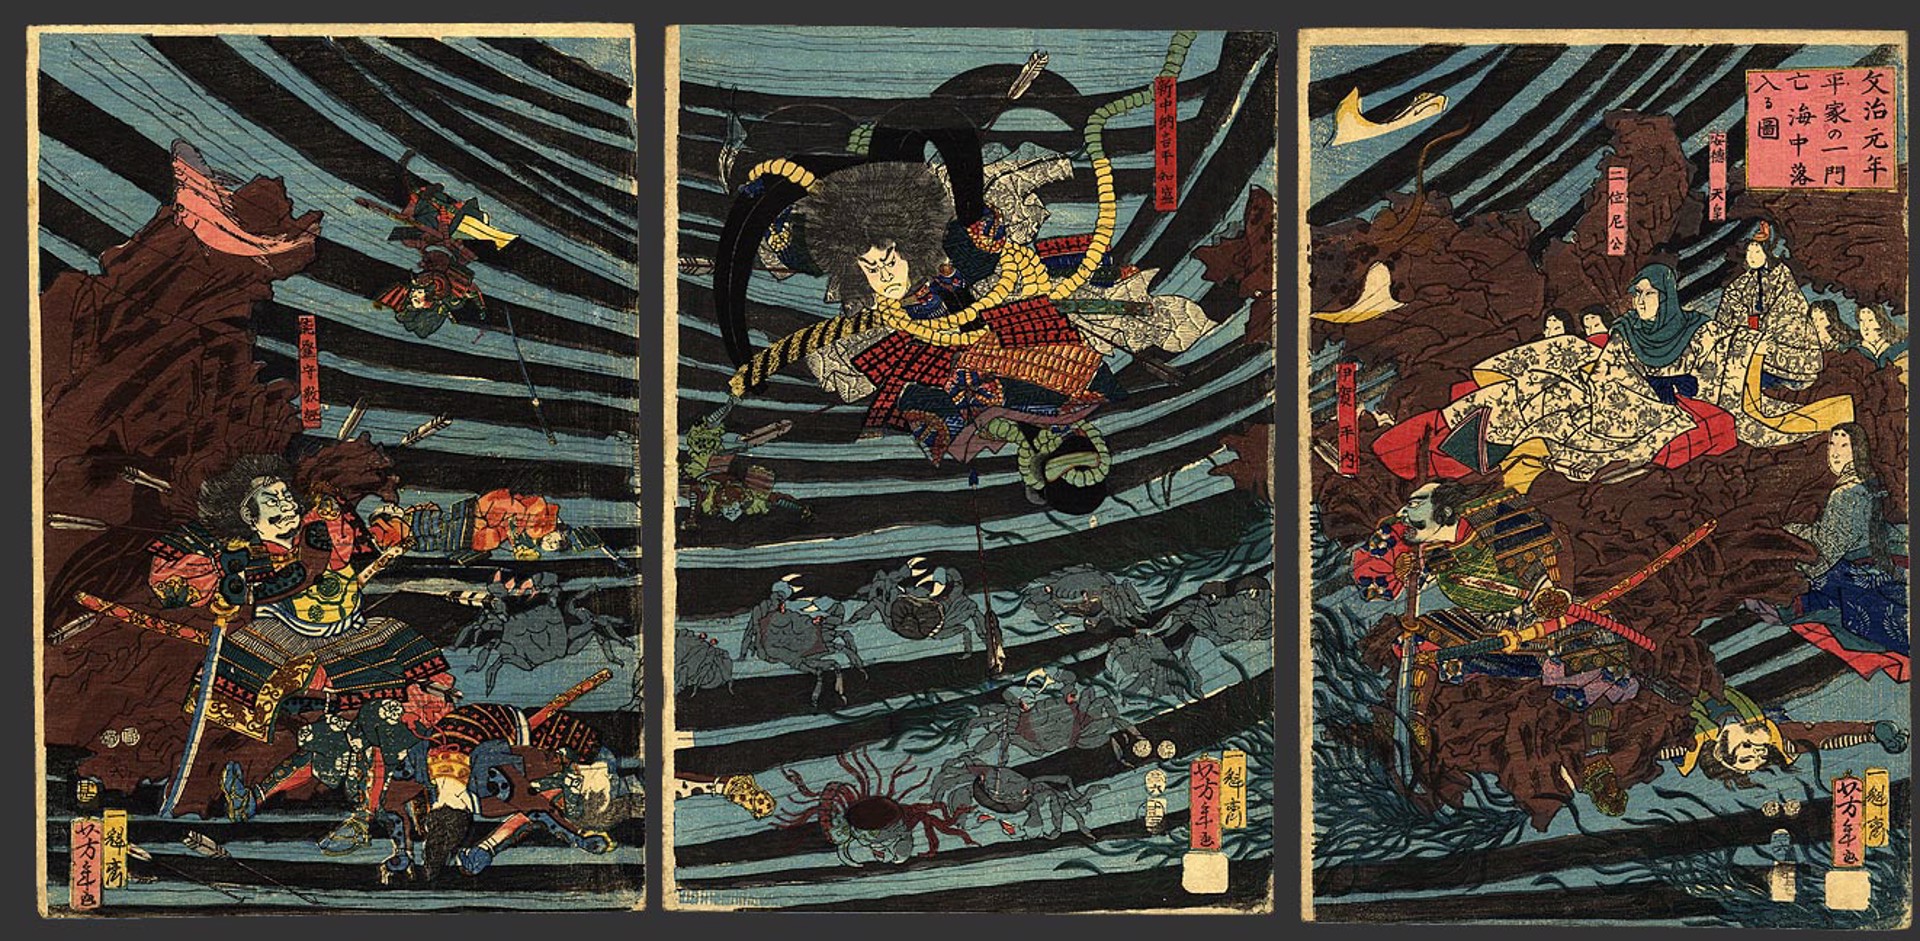 The Heike Clan sinking into the sea and perishing in 1185 by Yoshitoshi